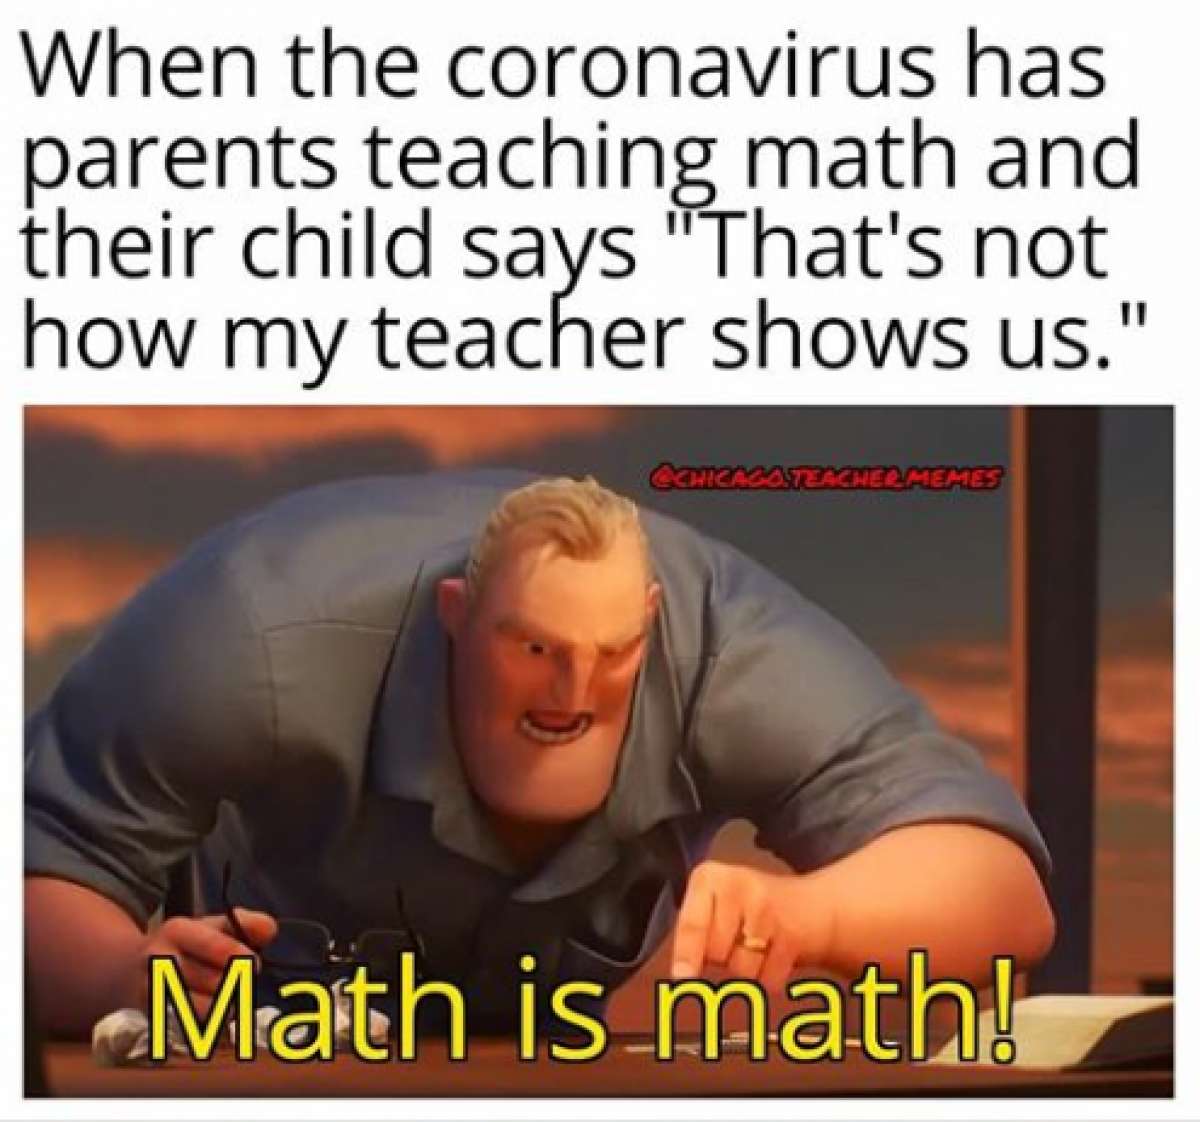 homeschooling memes - When the coronavirus has parents teaching math and their child says "That's not how my teacher shows us.' Chicagasteschermemes Math is.math!